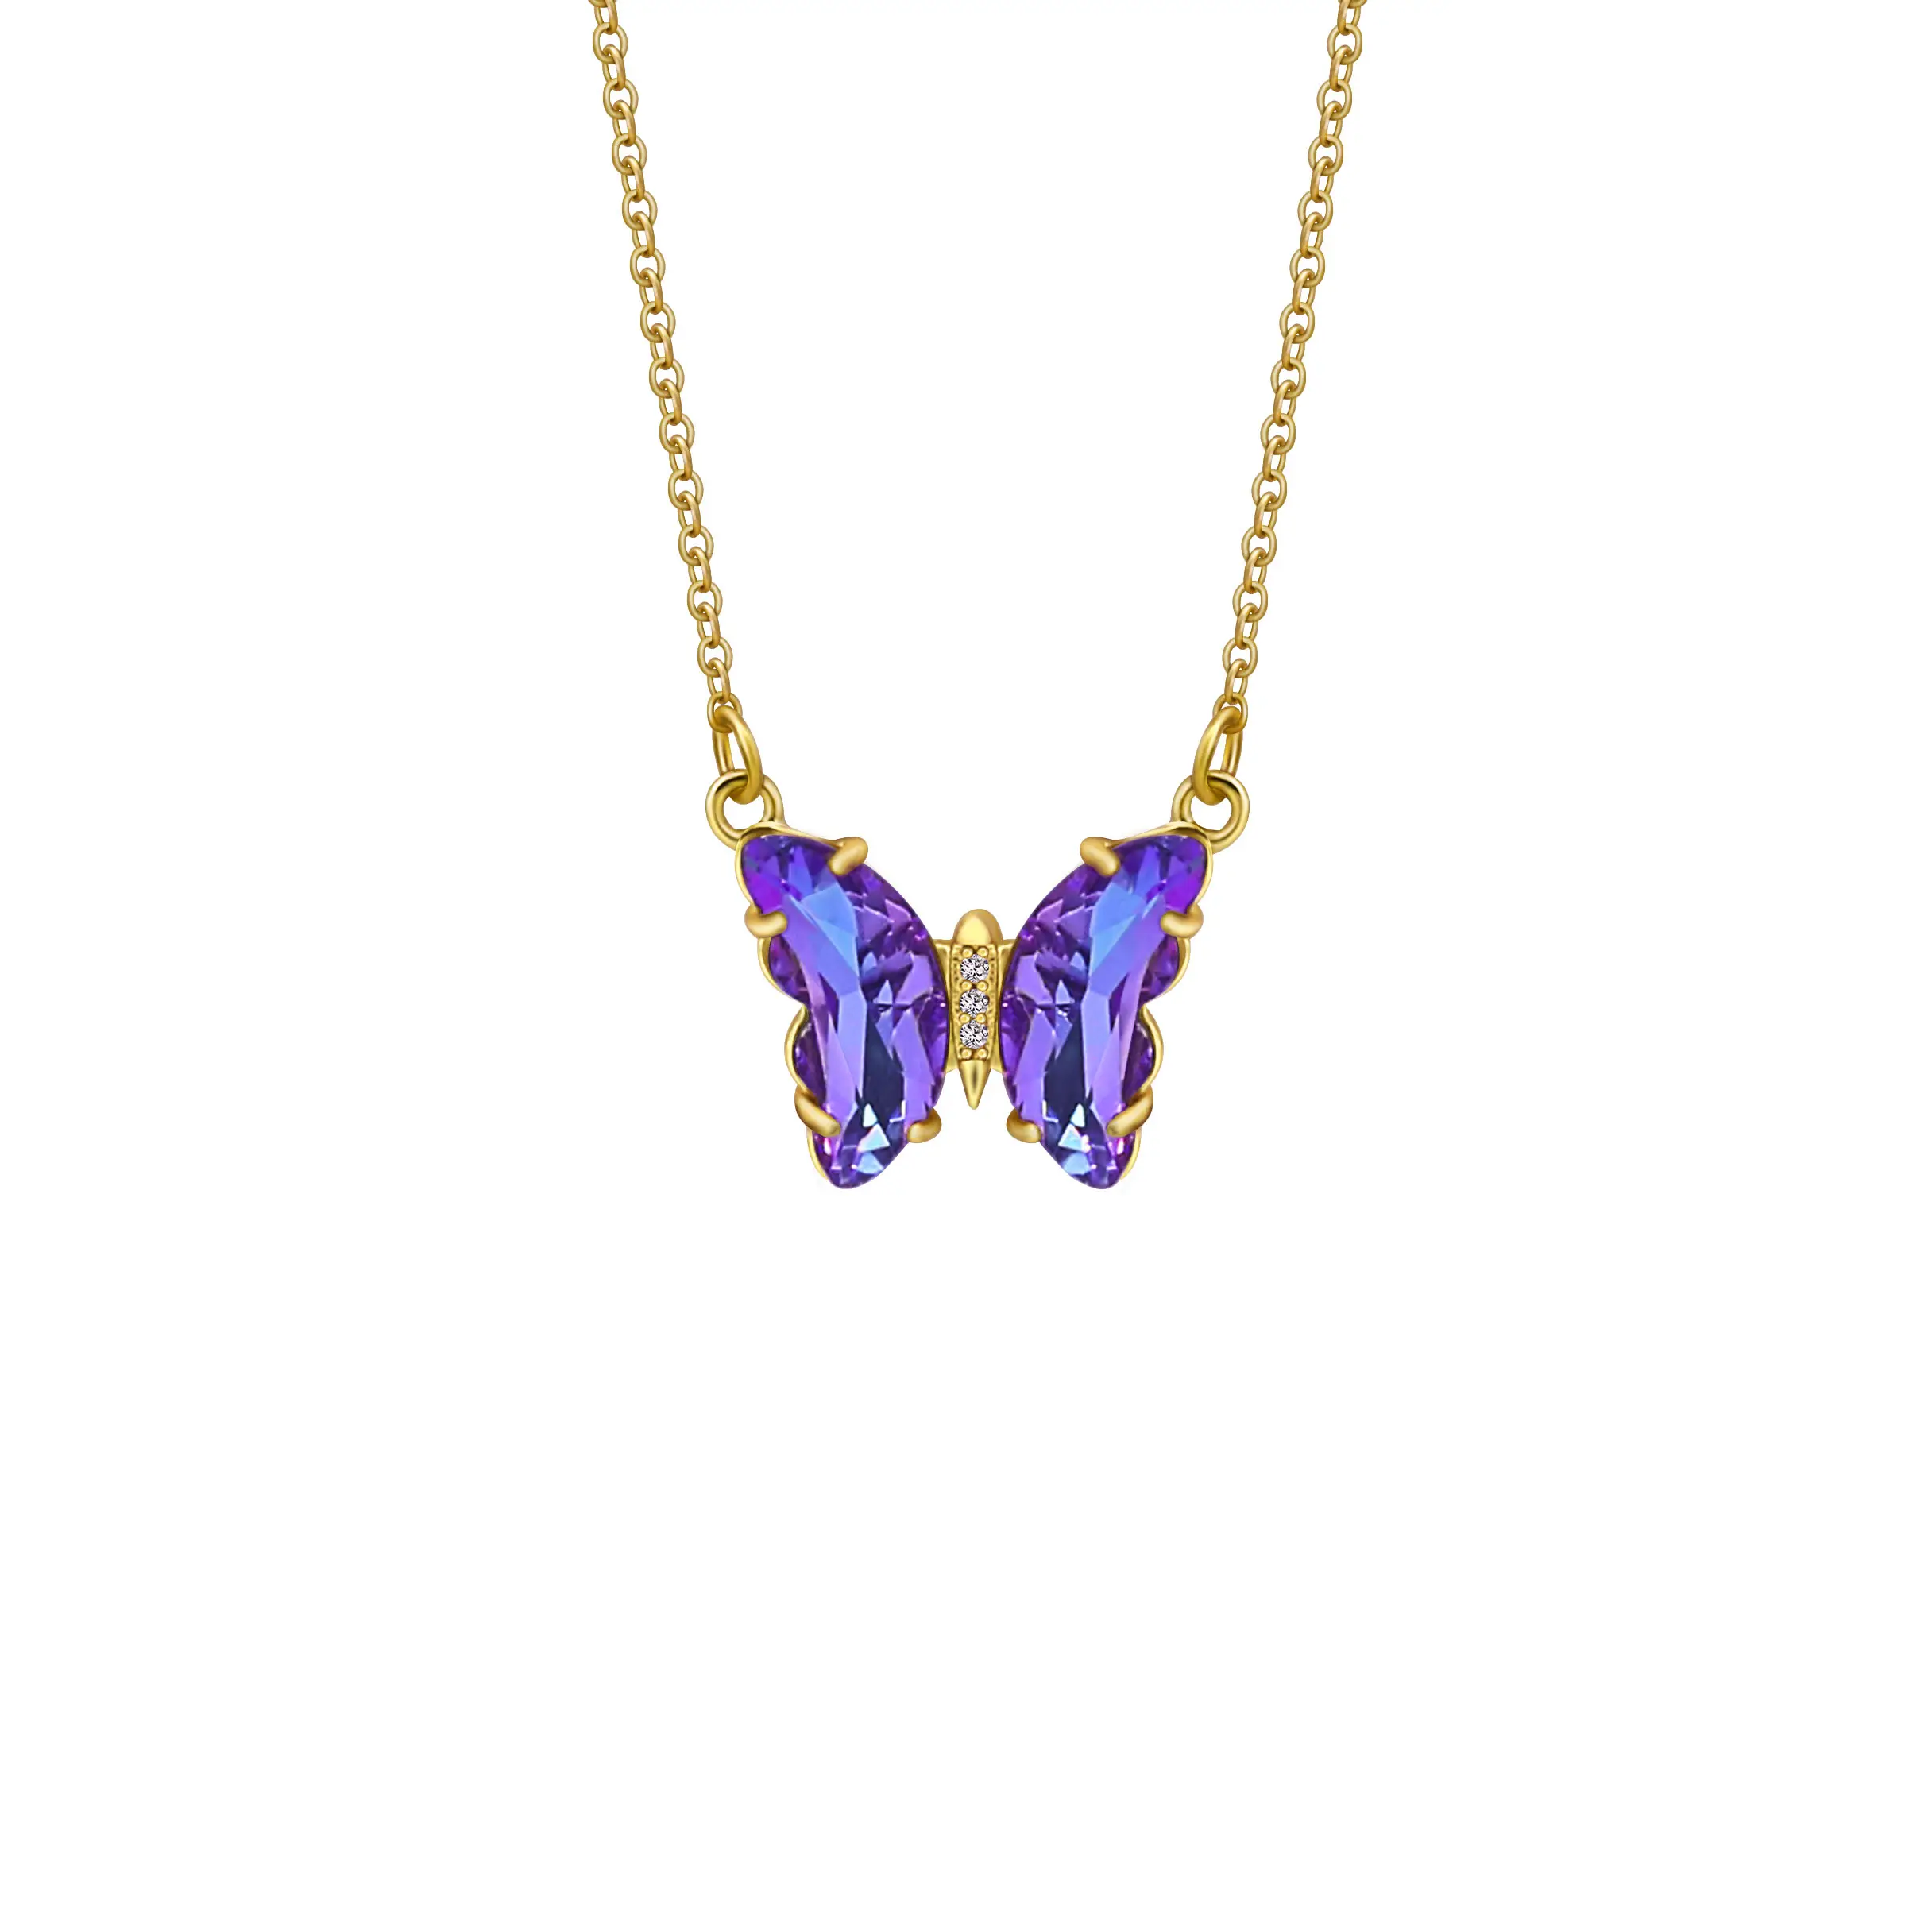 Mode Desain Baru Perhiasan Wanita Indah Berbentuk Kupu-kupu Penuh Warna Kaca Besar Kalung Choker